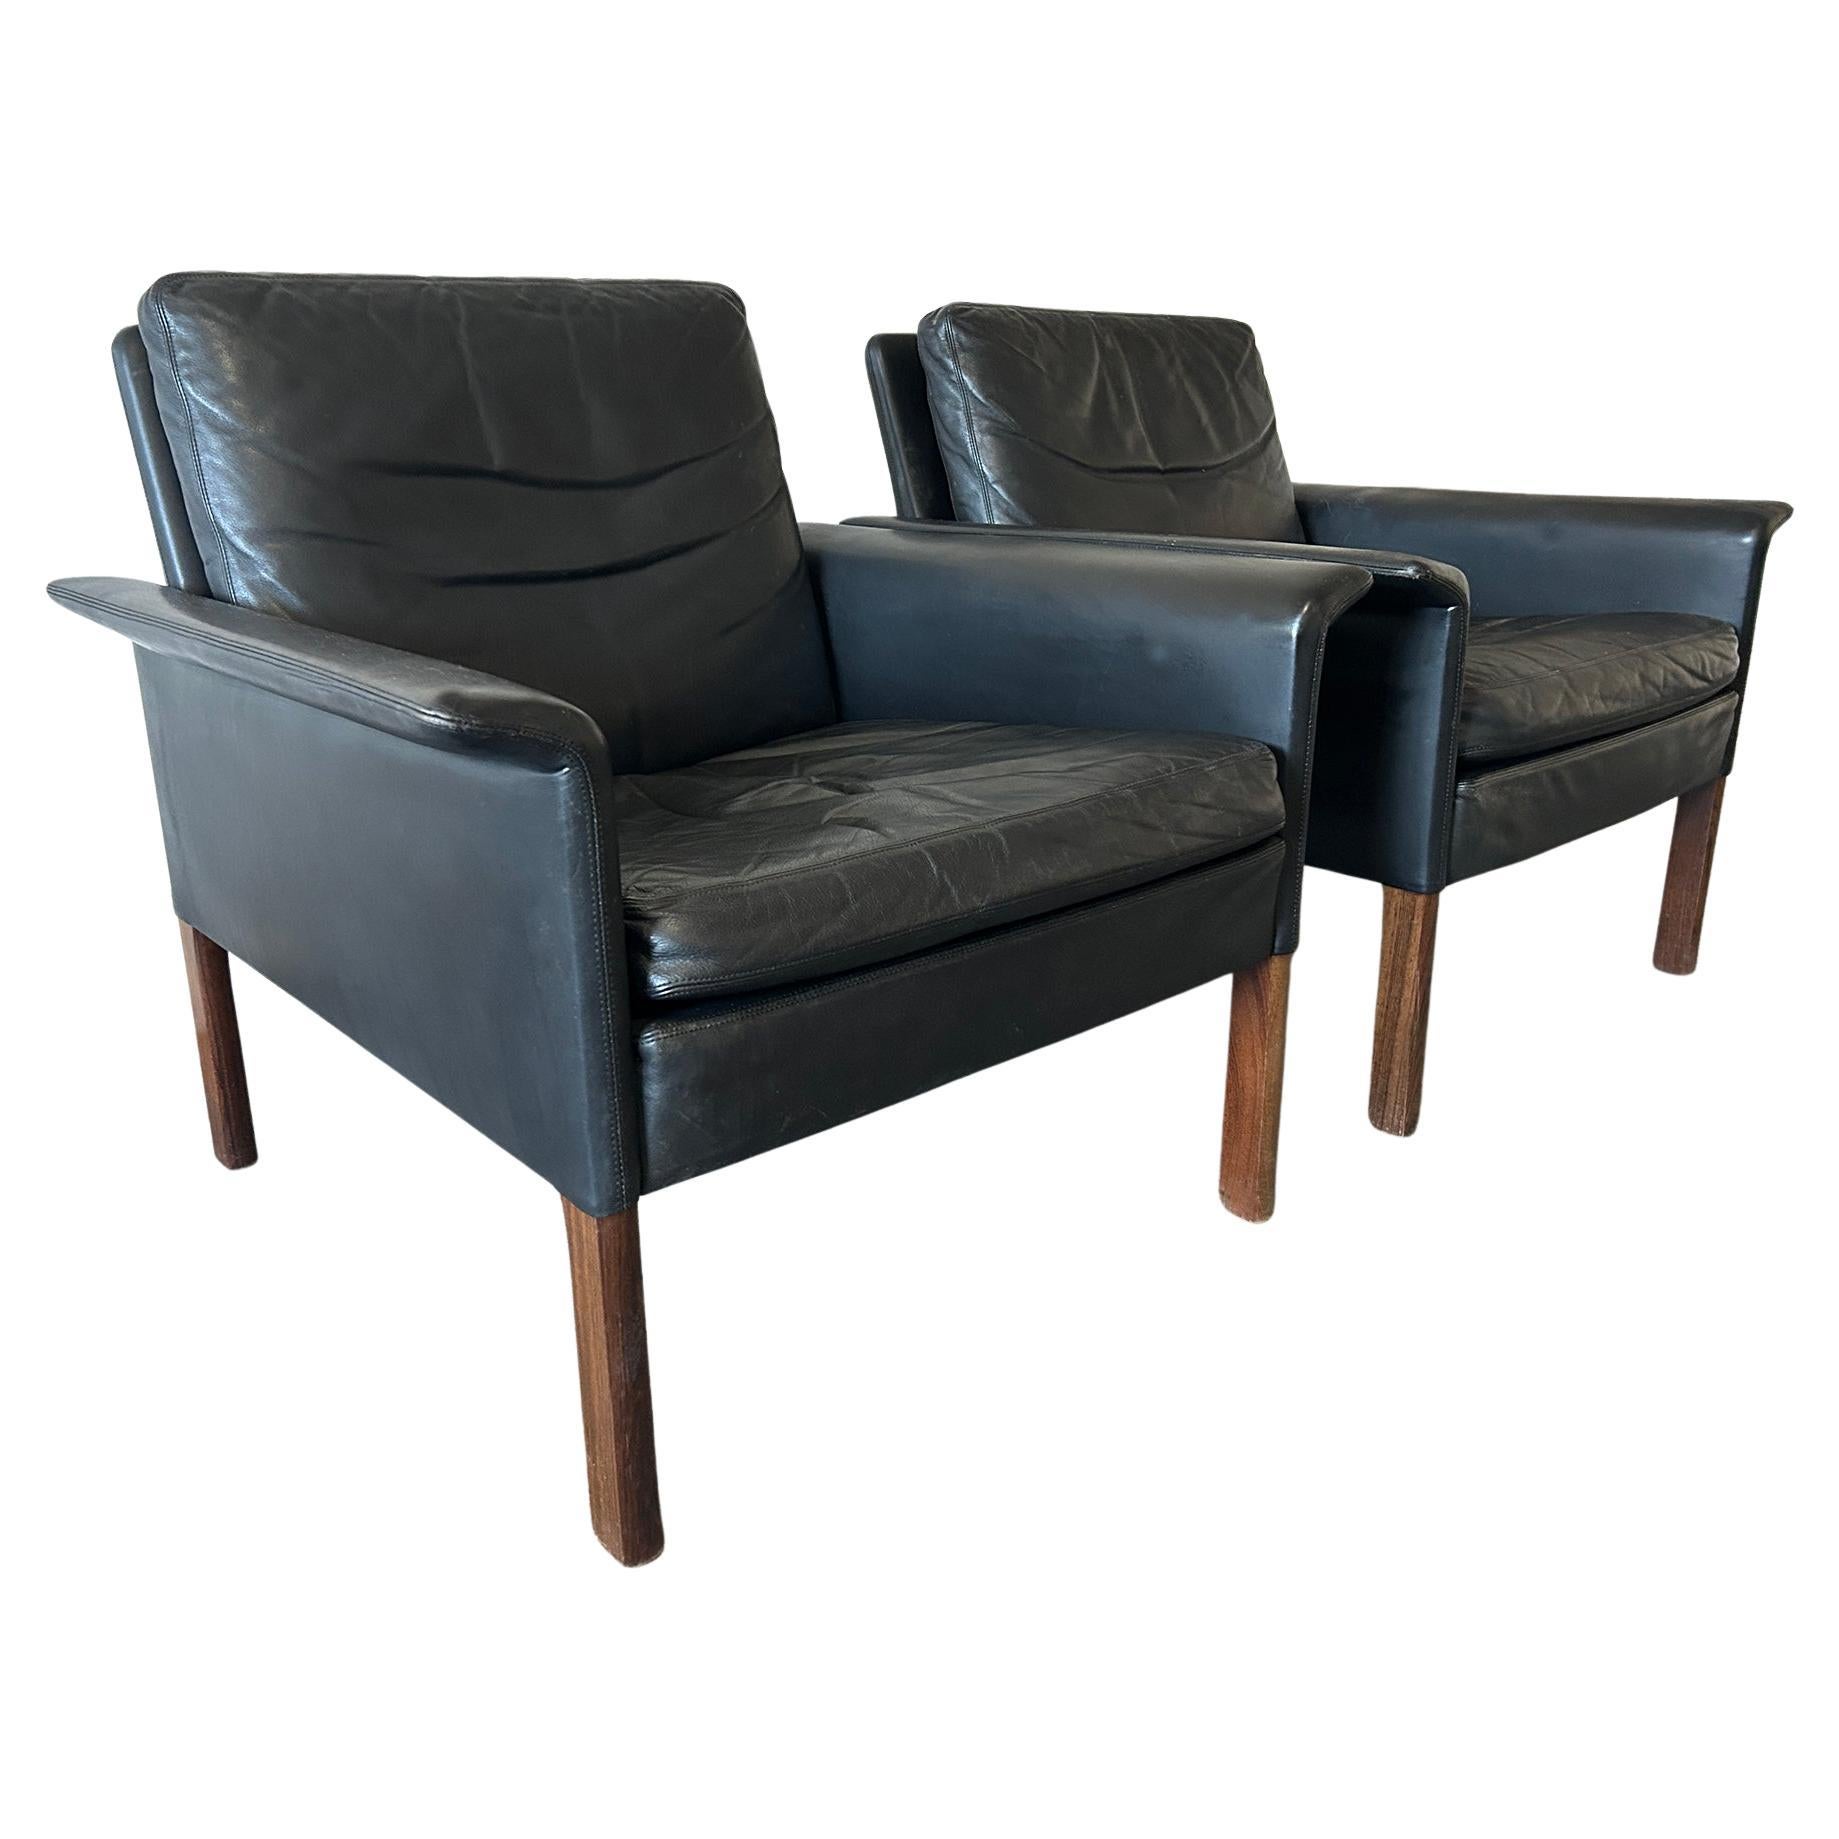 Pair Mid-Century Danish Modern Hans Olsen Black Leather Lounge Chairs Model 500 For Sale